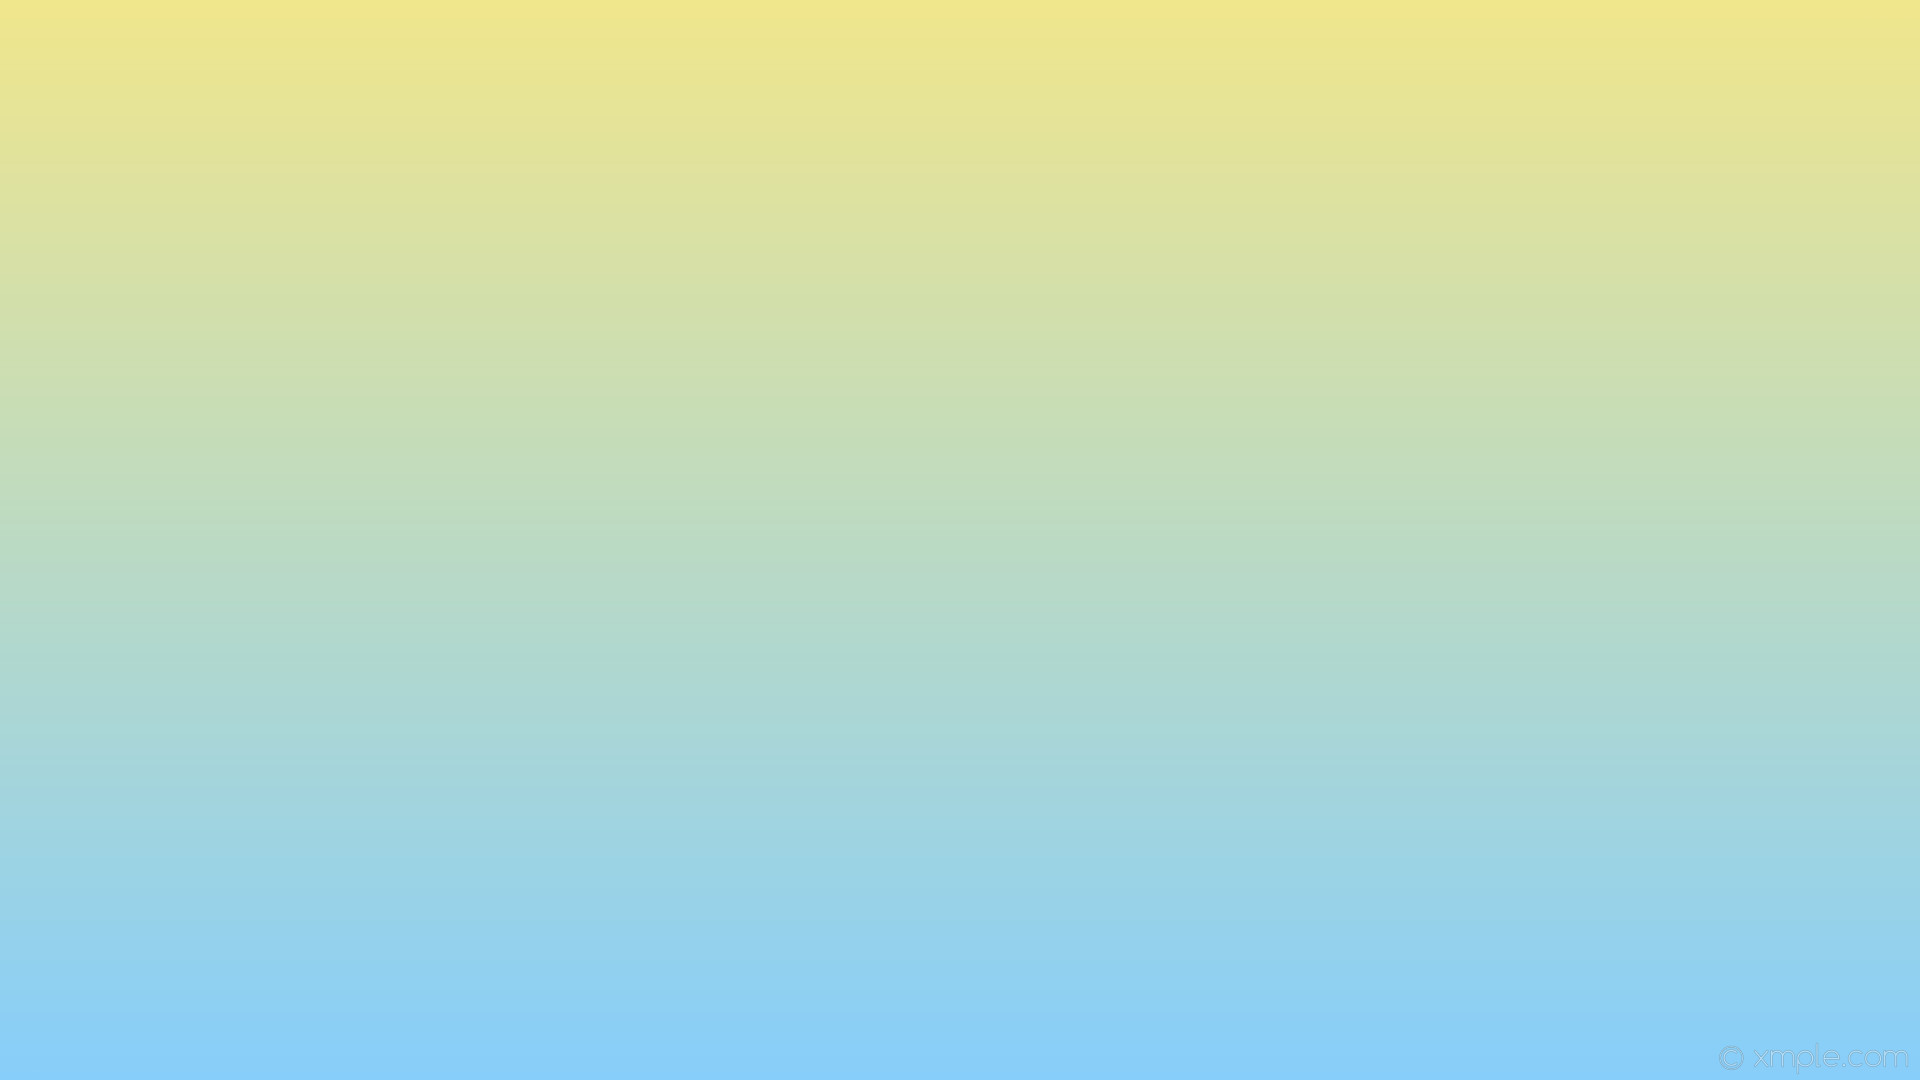 1920x1080 wallpaper blue gradient yellow linear light sky blue khaki #87cefa #f0e68c  270Â°